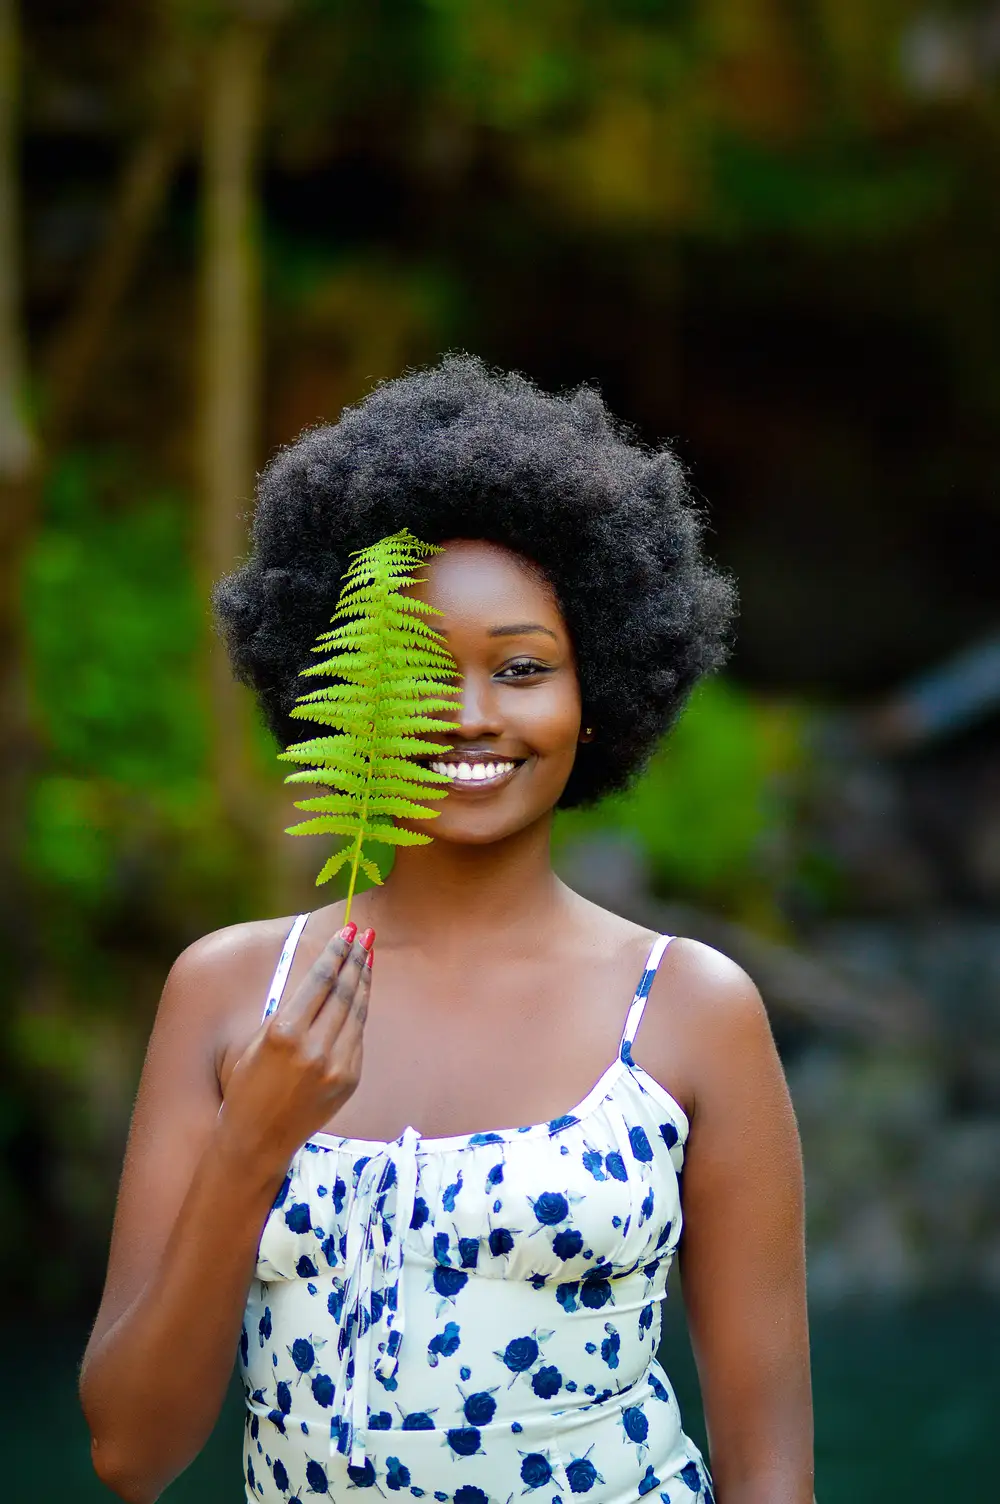 Smiling behind a fern